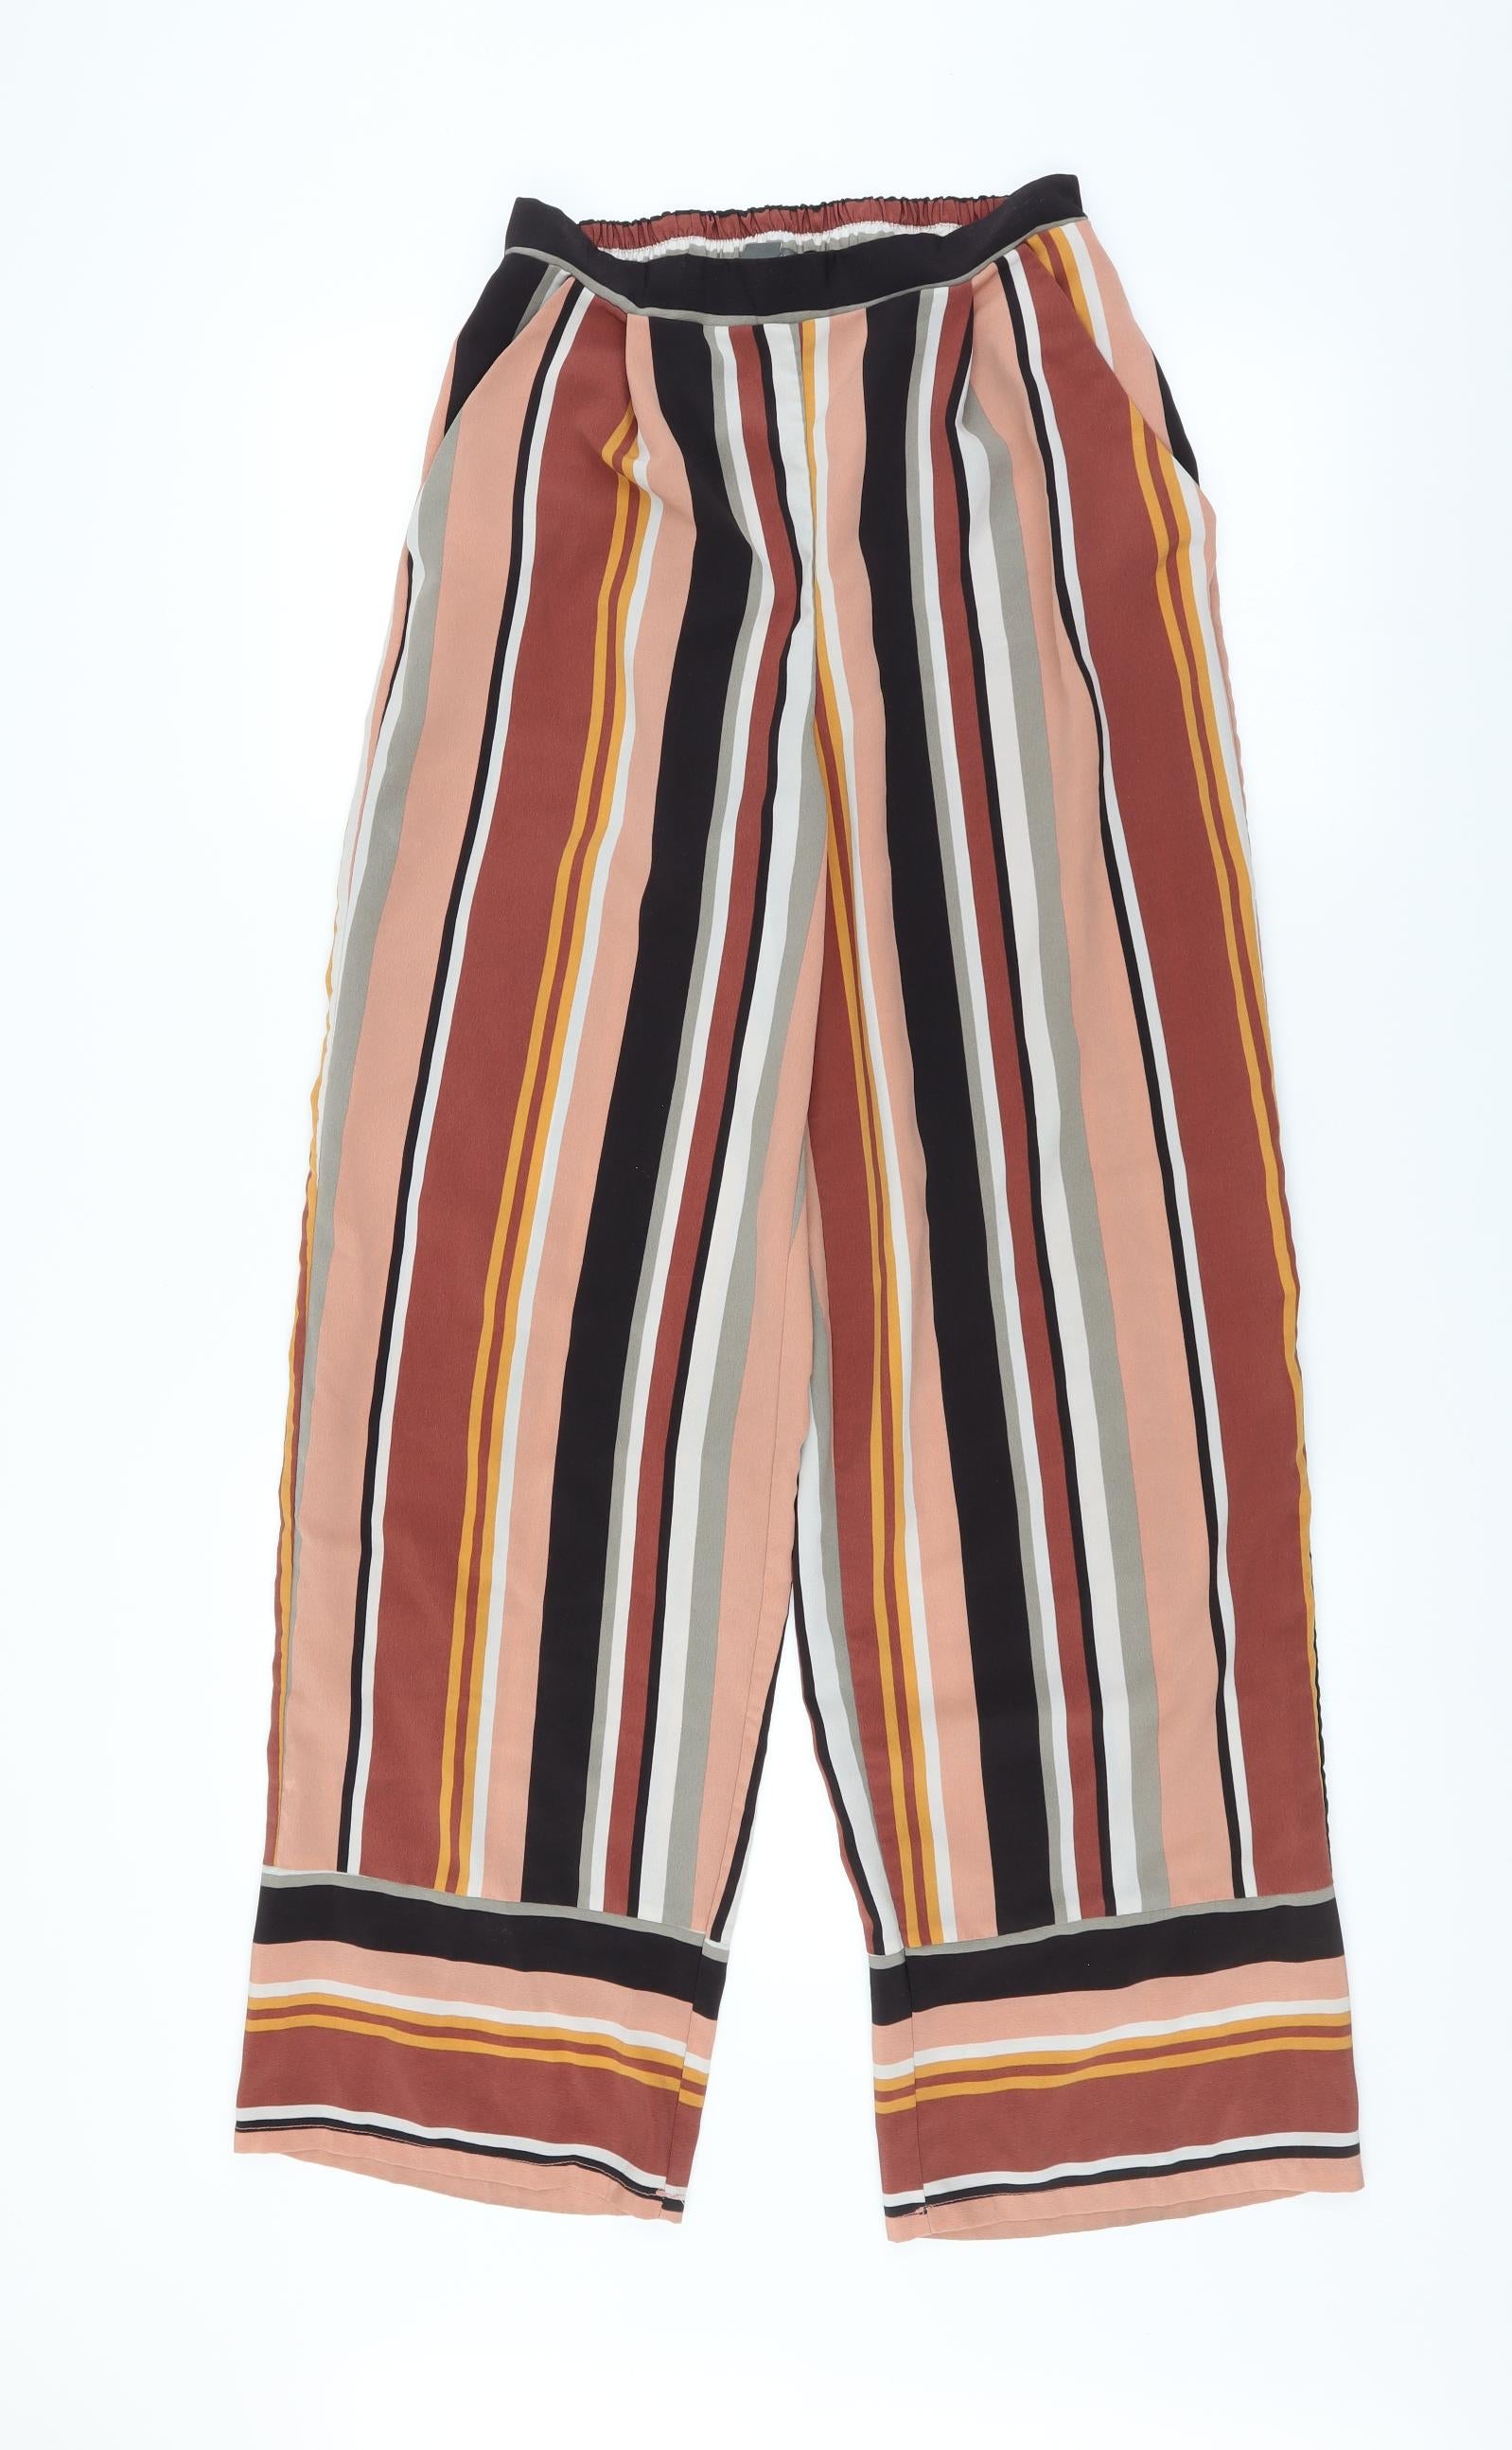 Womens Primark Size 10 Summer Trousers | eBay